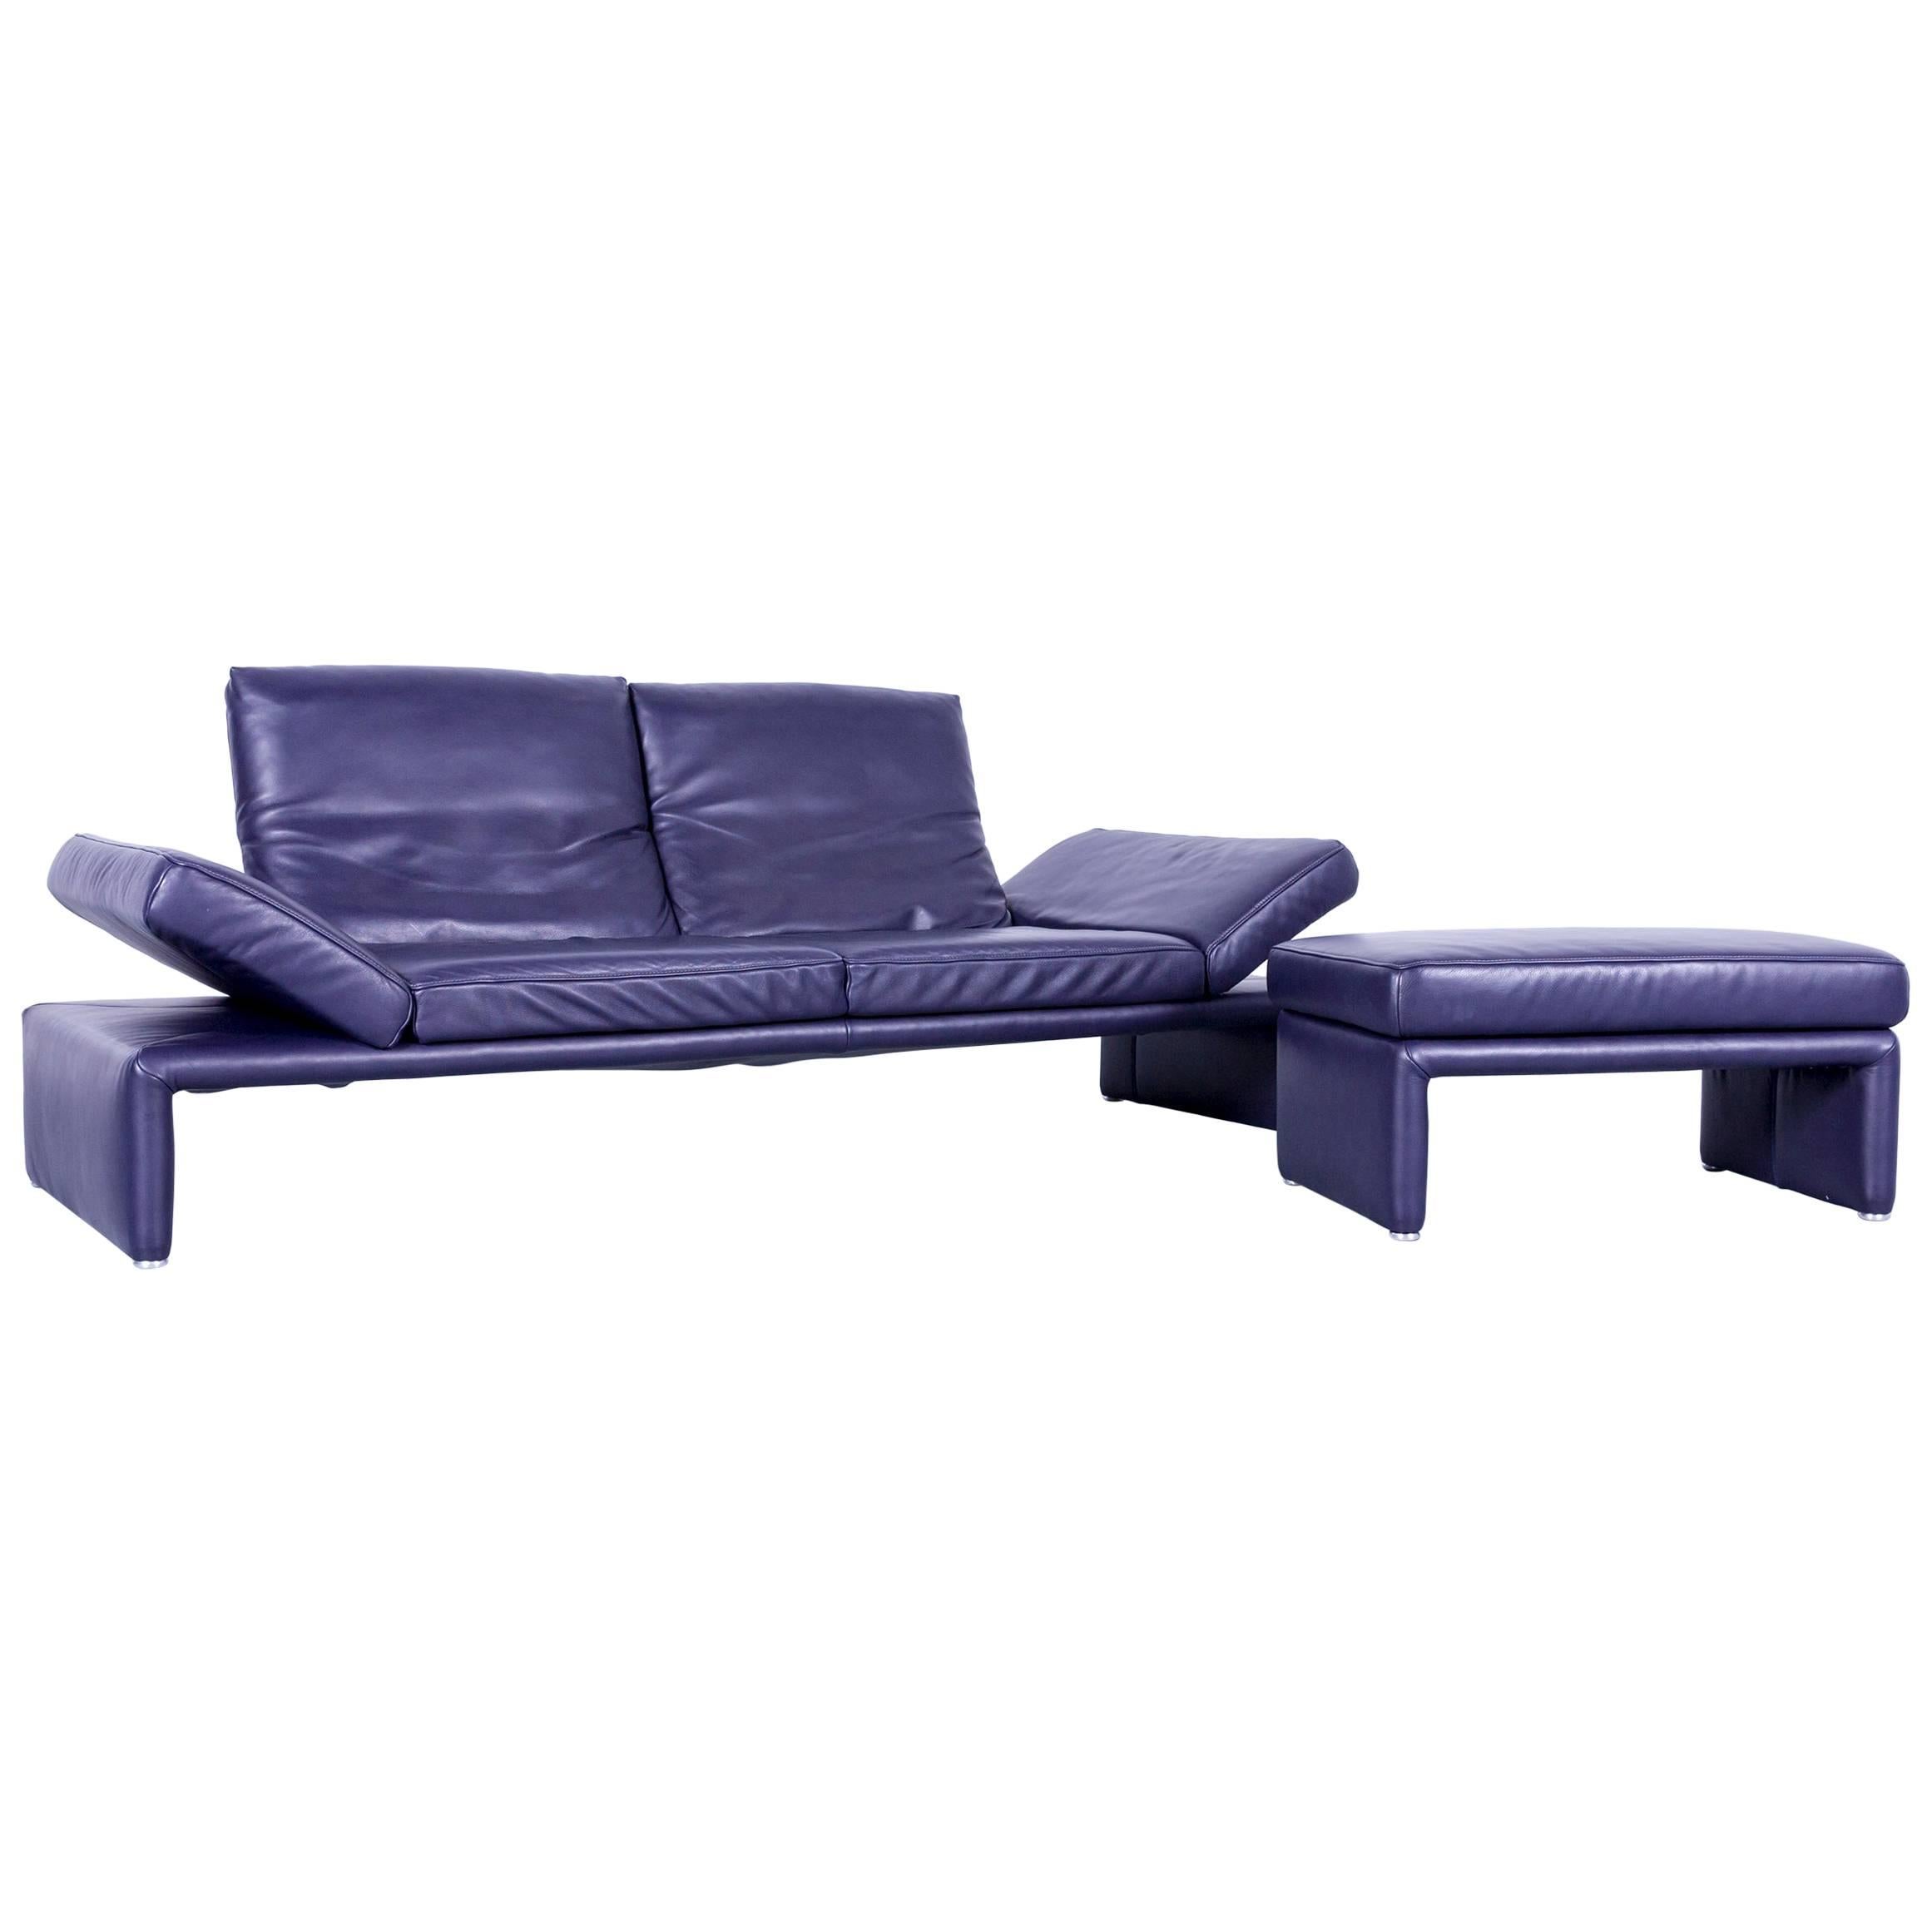 Koinor Raoul Designer Sofa Set Purple Eggplant Leather Three-Seat Couch